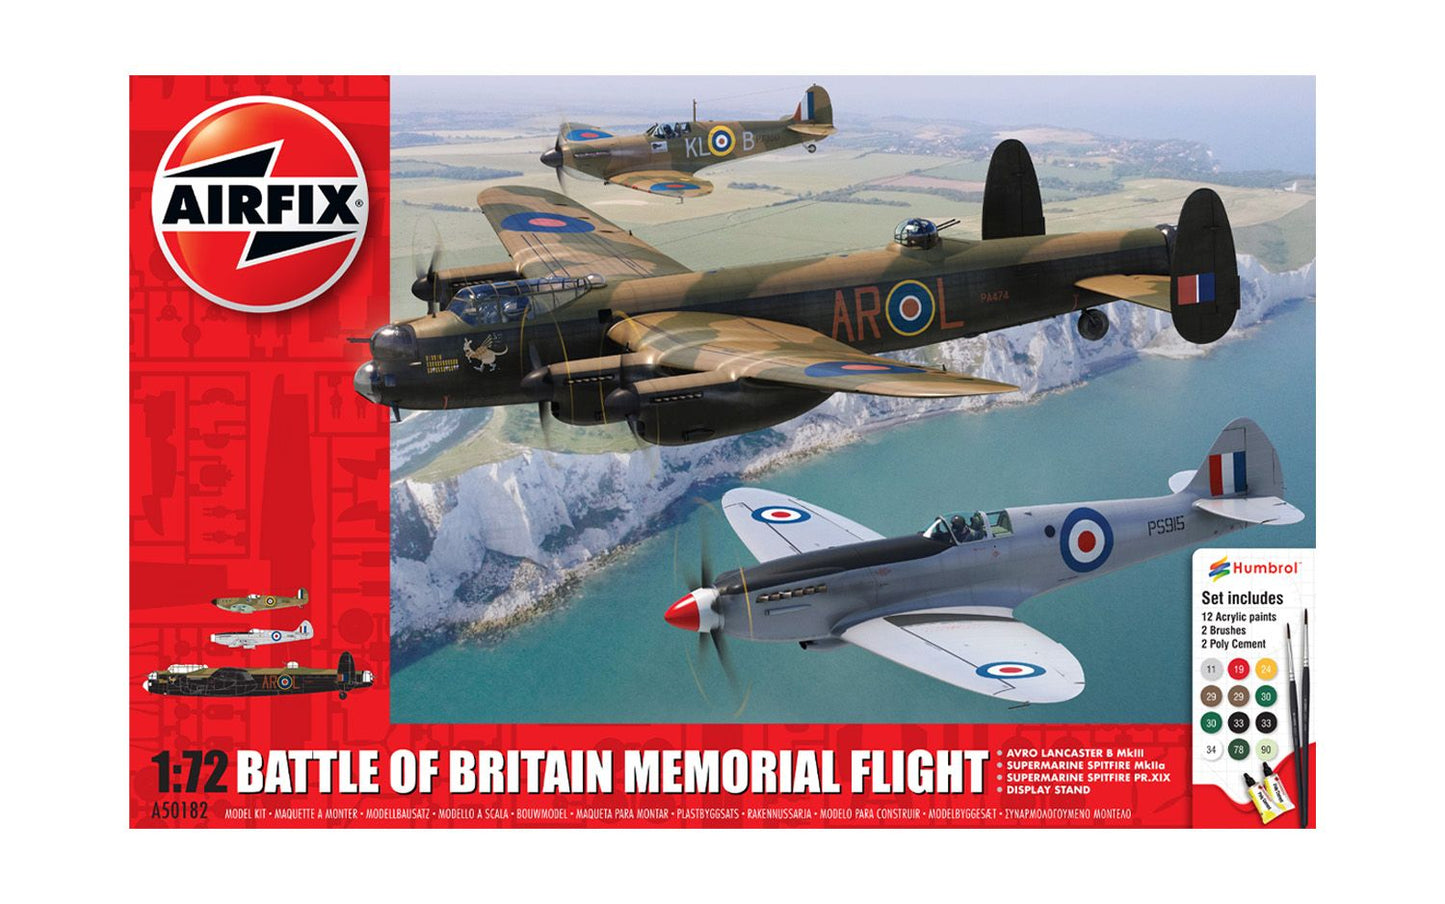 Airfix 1/72nd scale Battle of Britain Memorial Flight